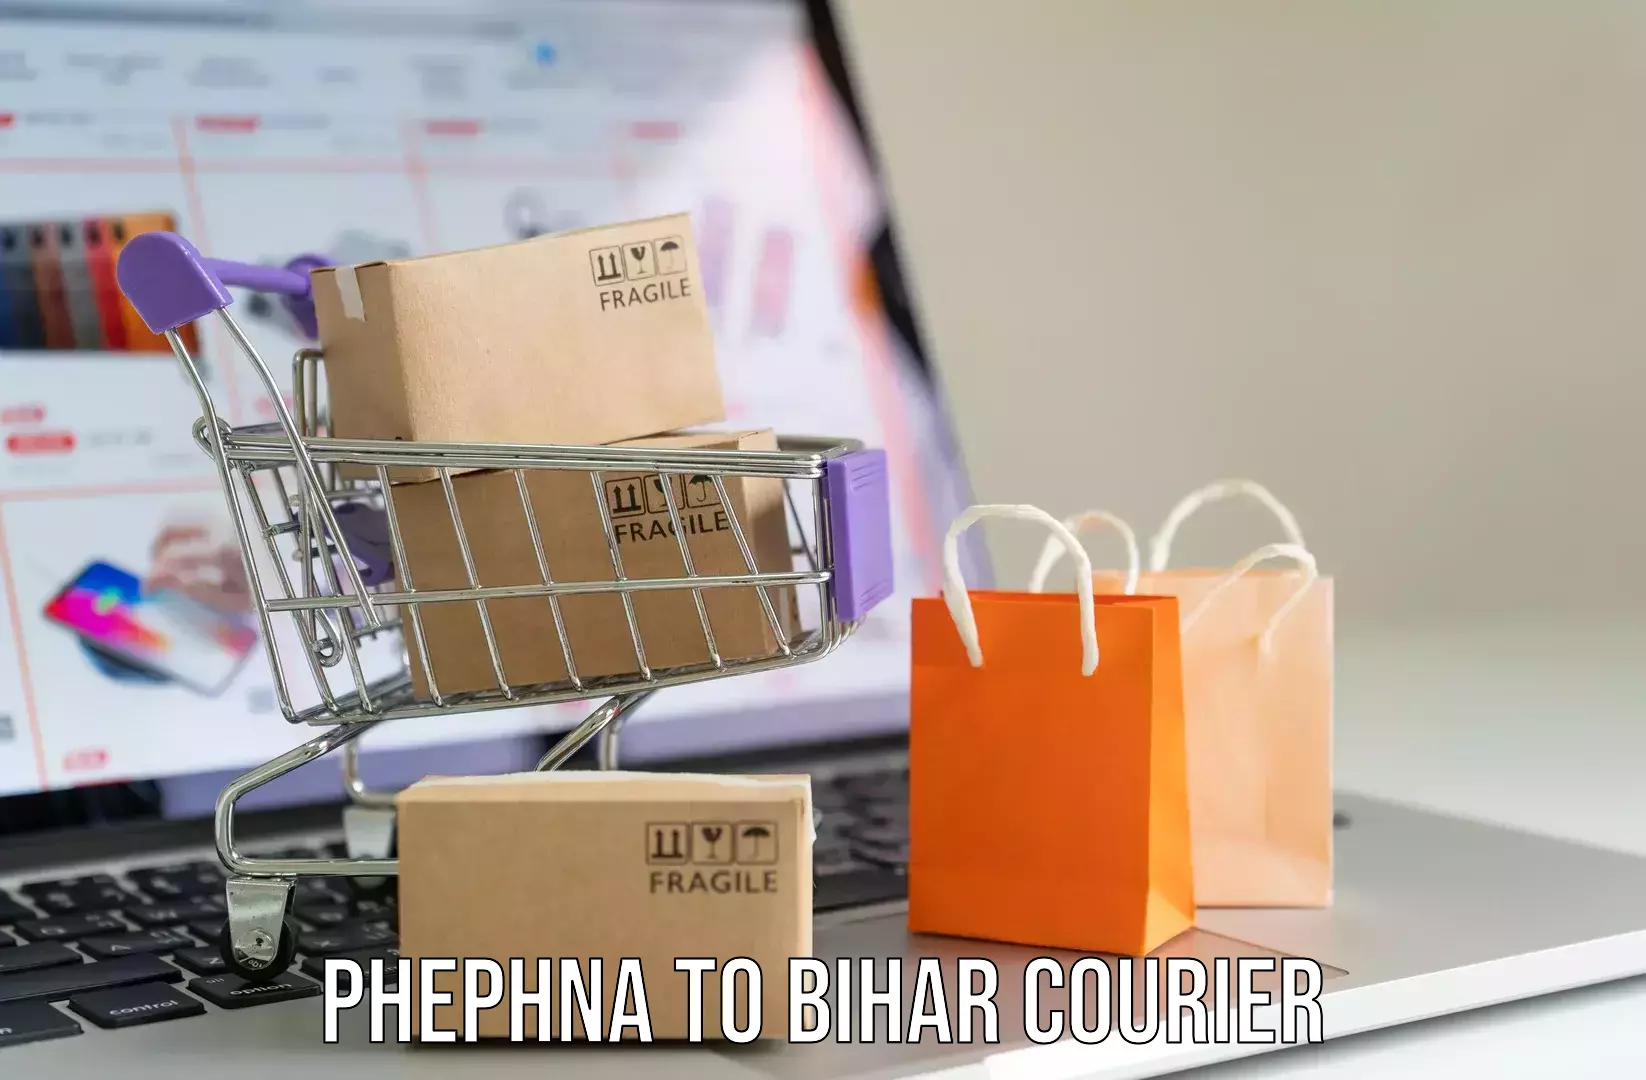 Same day luggage service Phephna to Bihar